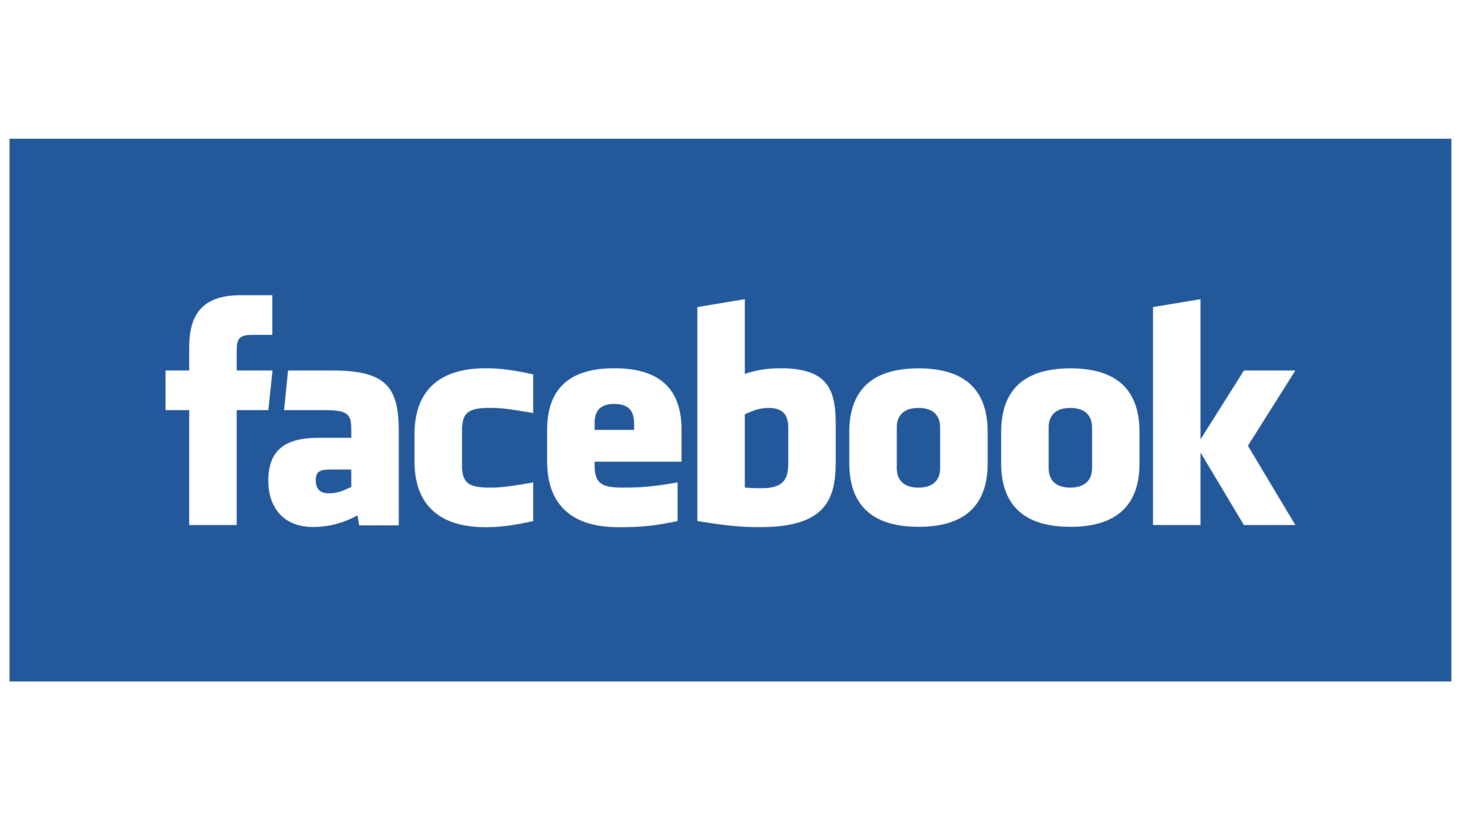 Facebook sign 2005 2015